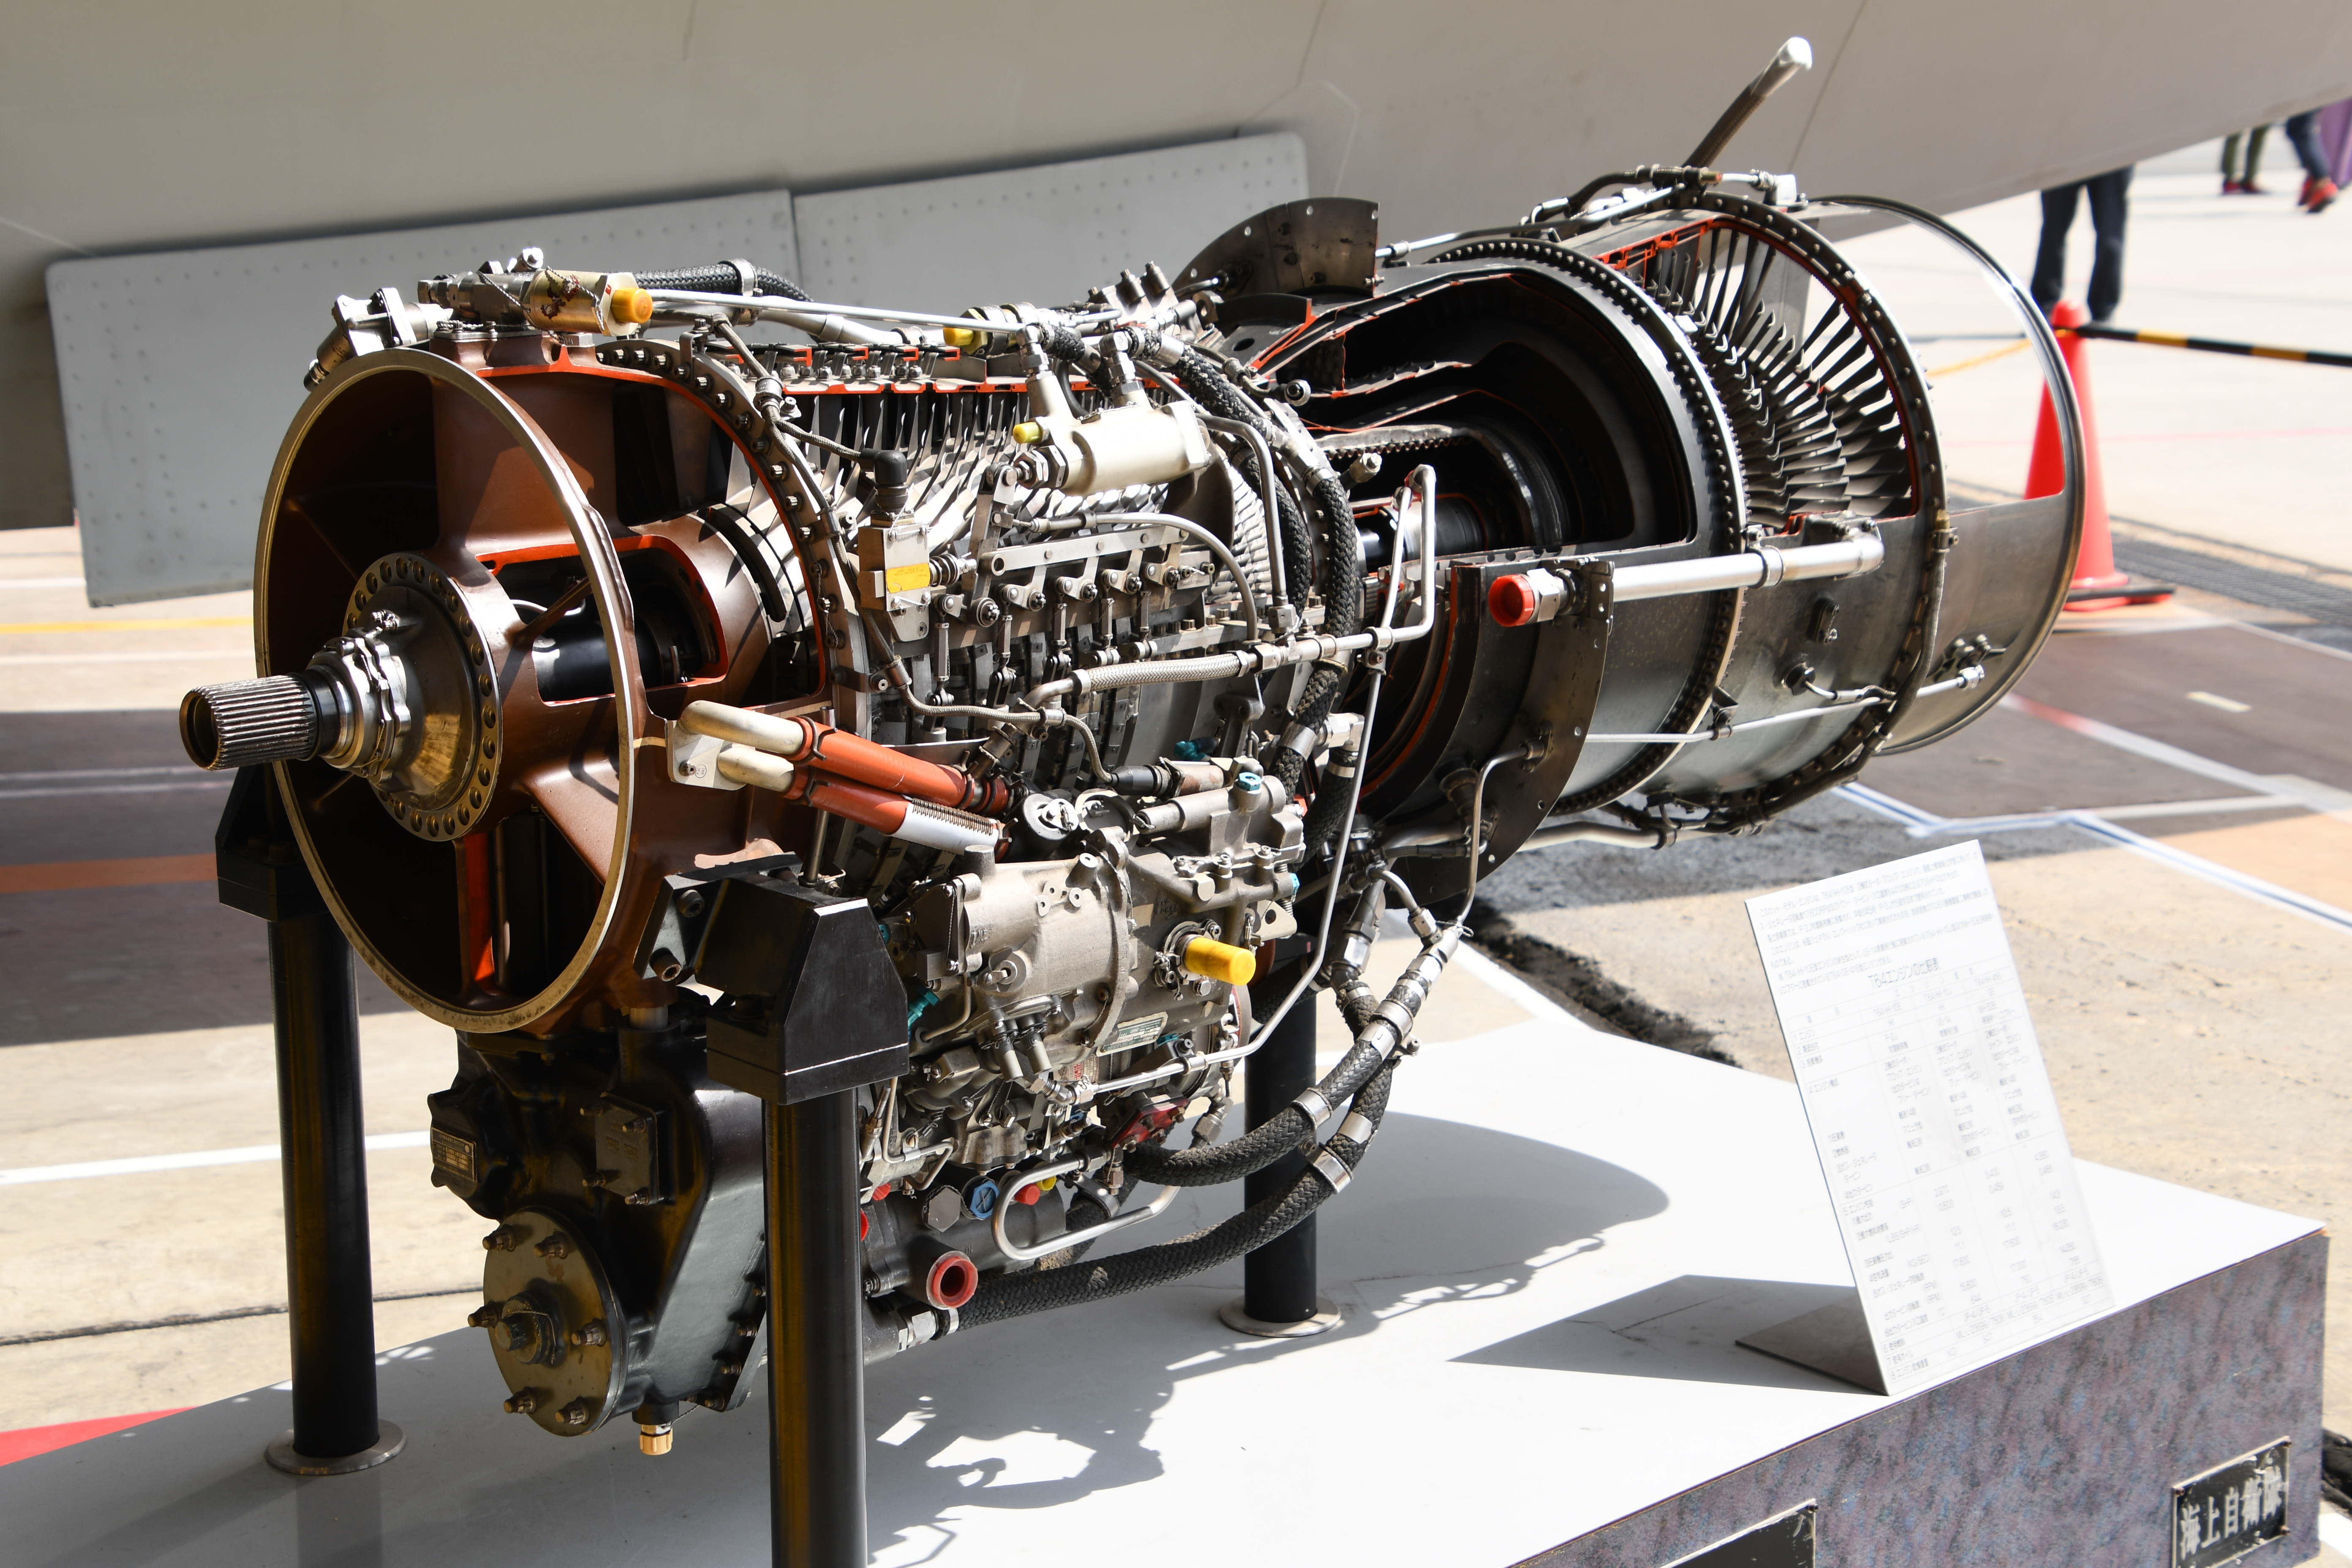 jet engine cutaway view diagram